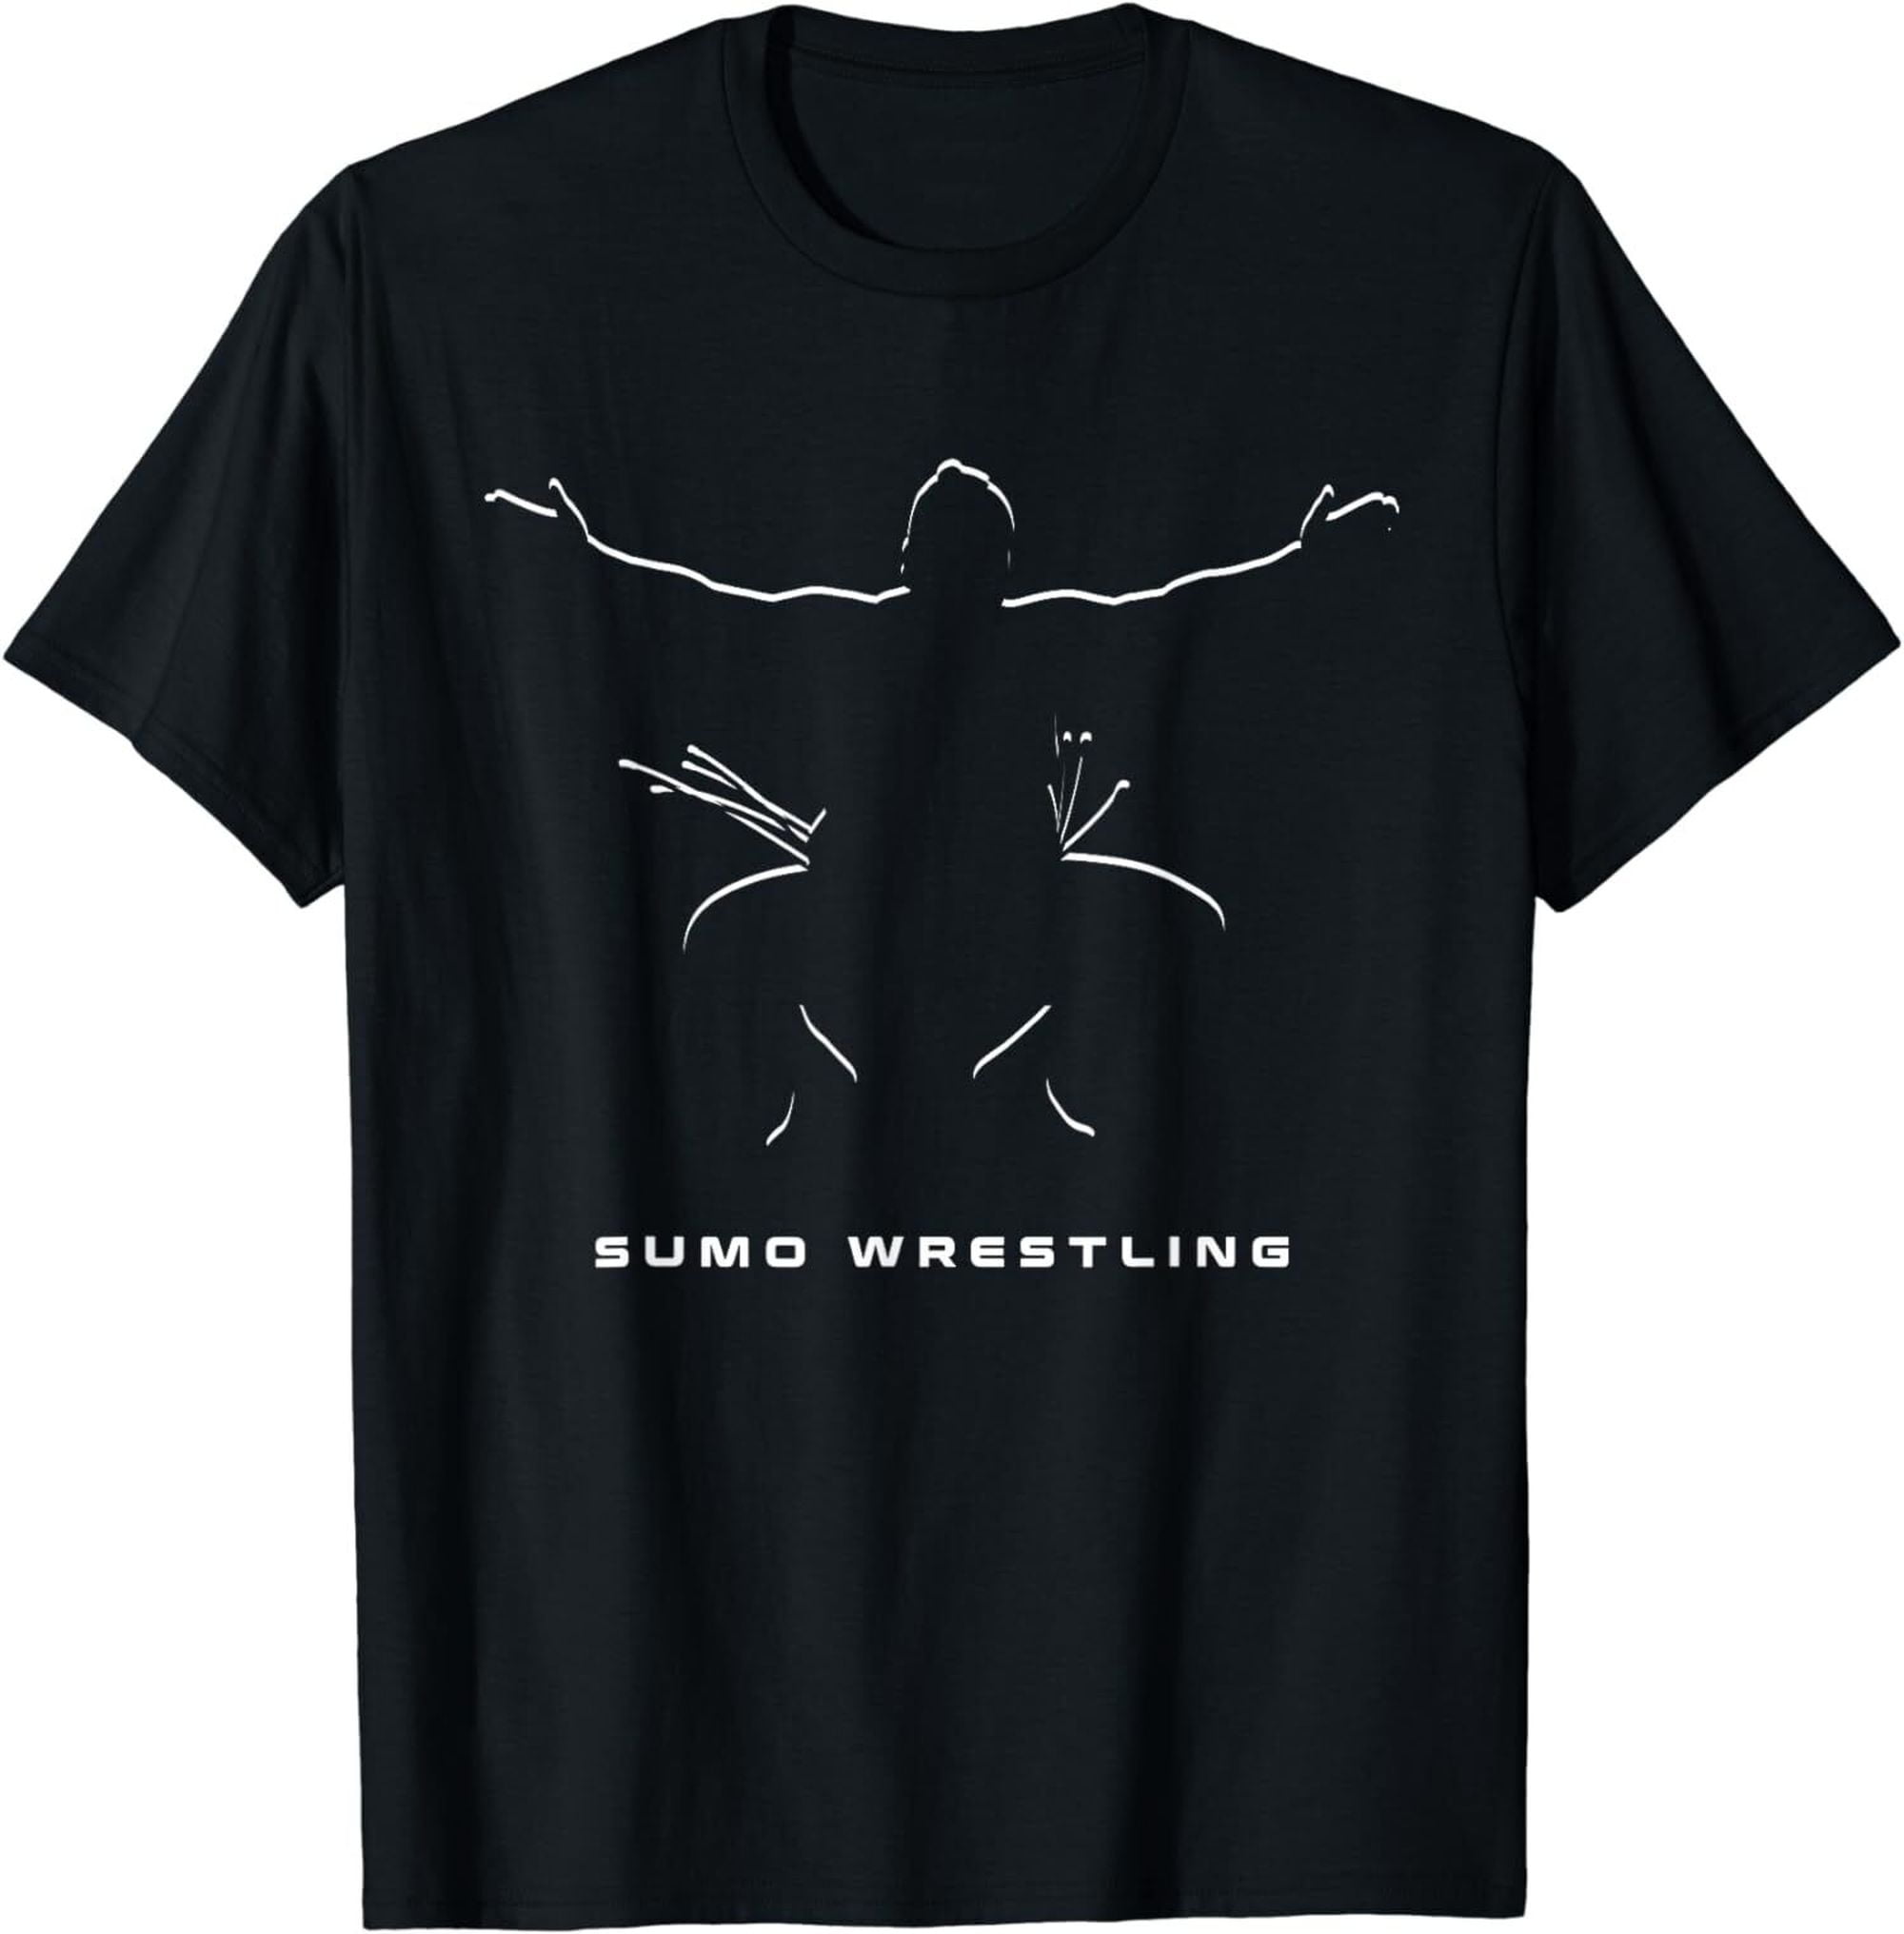 Sumo Wrestling Apparel - Unique Sumo Wrestler Graphic Tee for Fans ...